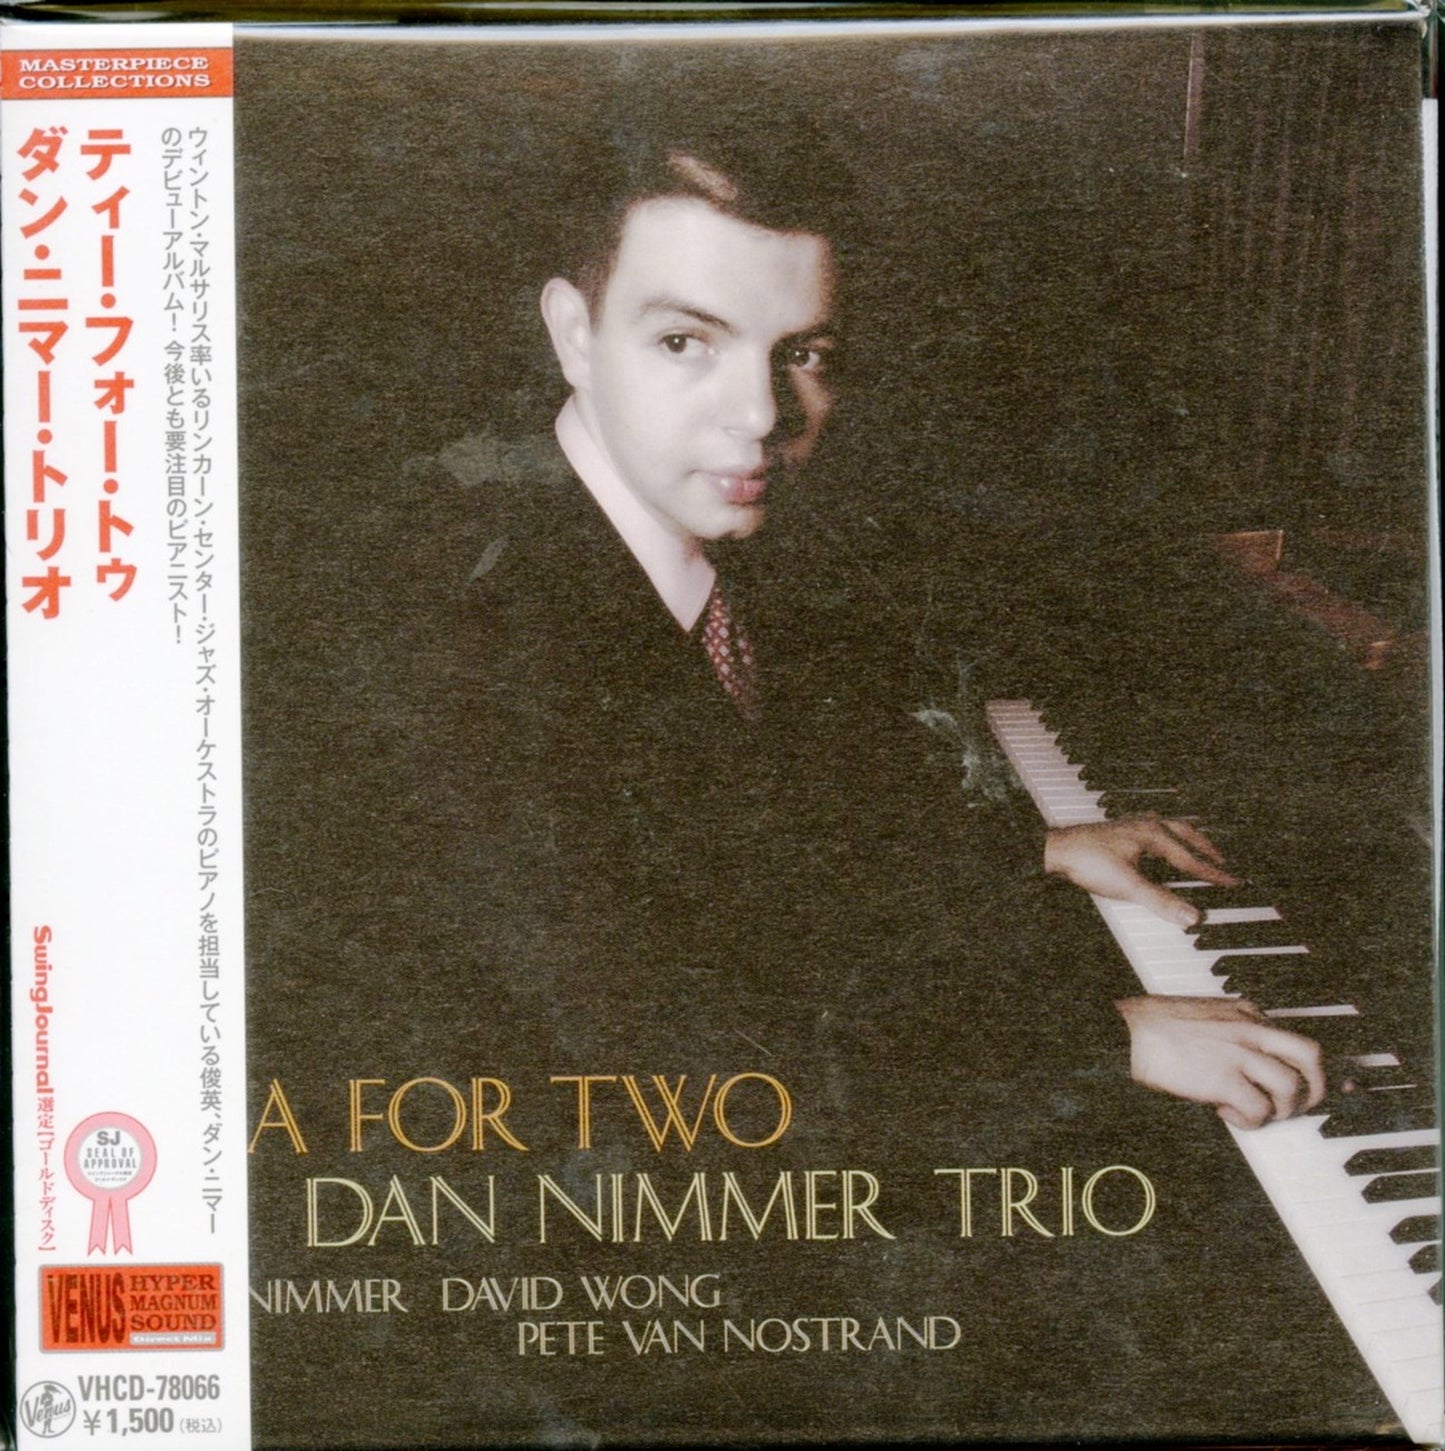 Dan Nimmer Trio - Tea For Two (Release year: 2010) - Mini LP CD